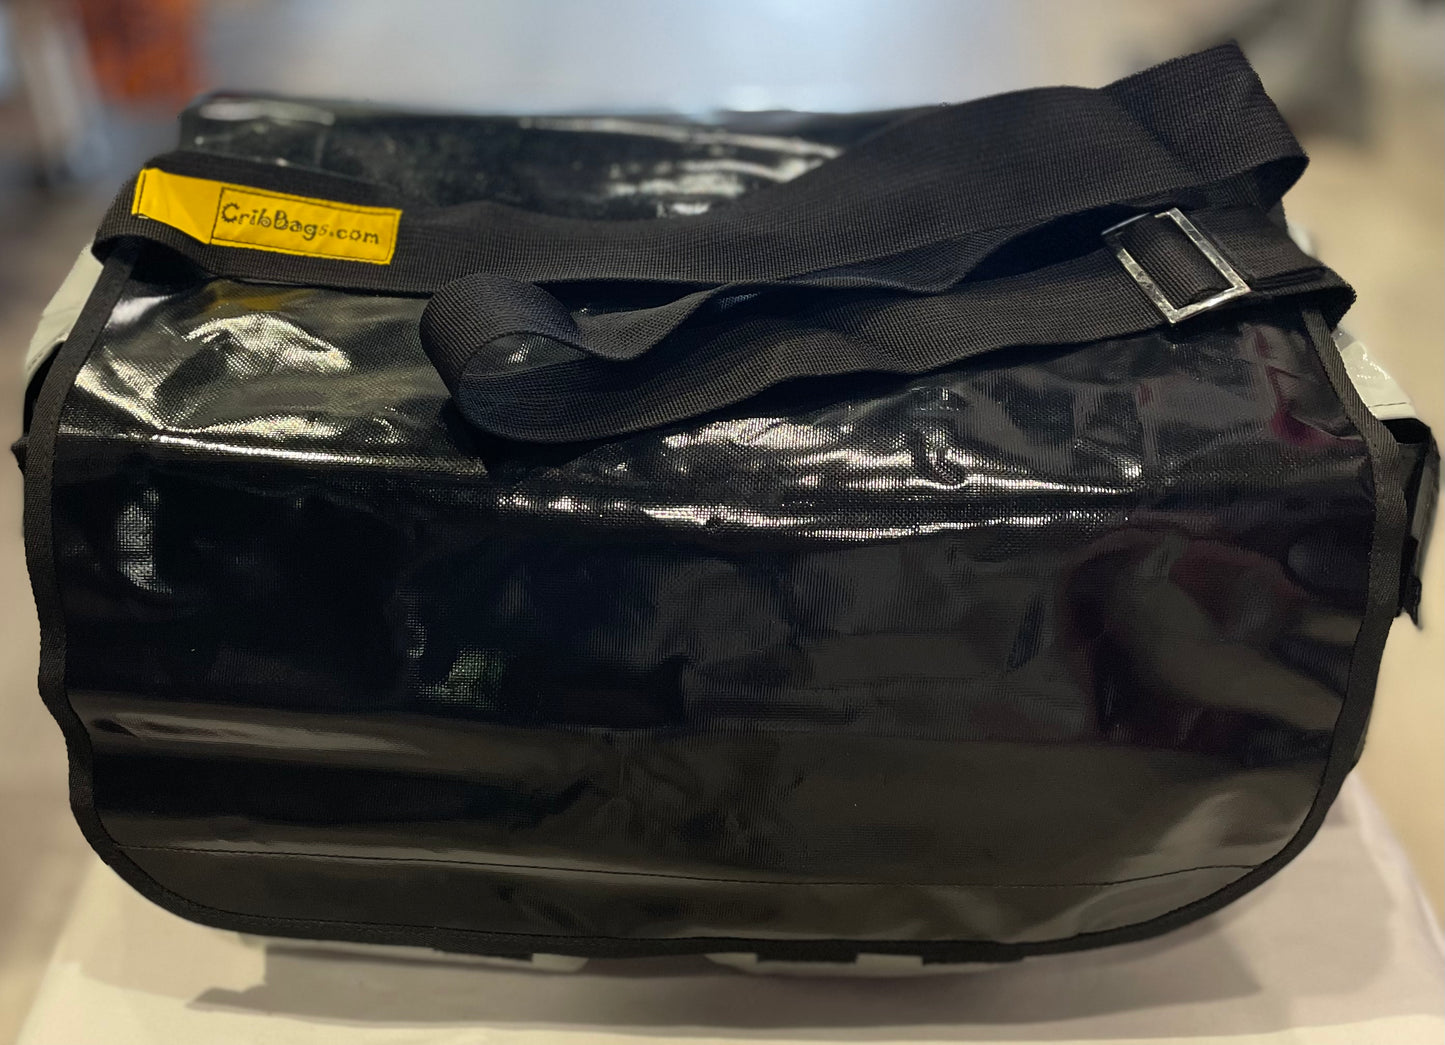 CribBags Extra Large Black and Grey Crib bag. Tough Vinyl Construct 4 pockets outside, 3 pockets inside.